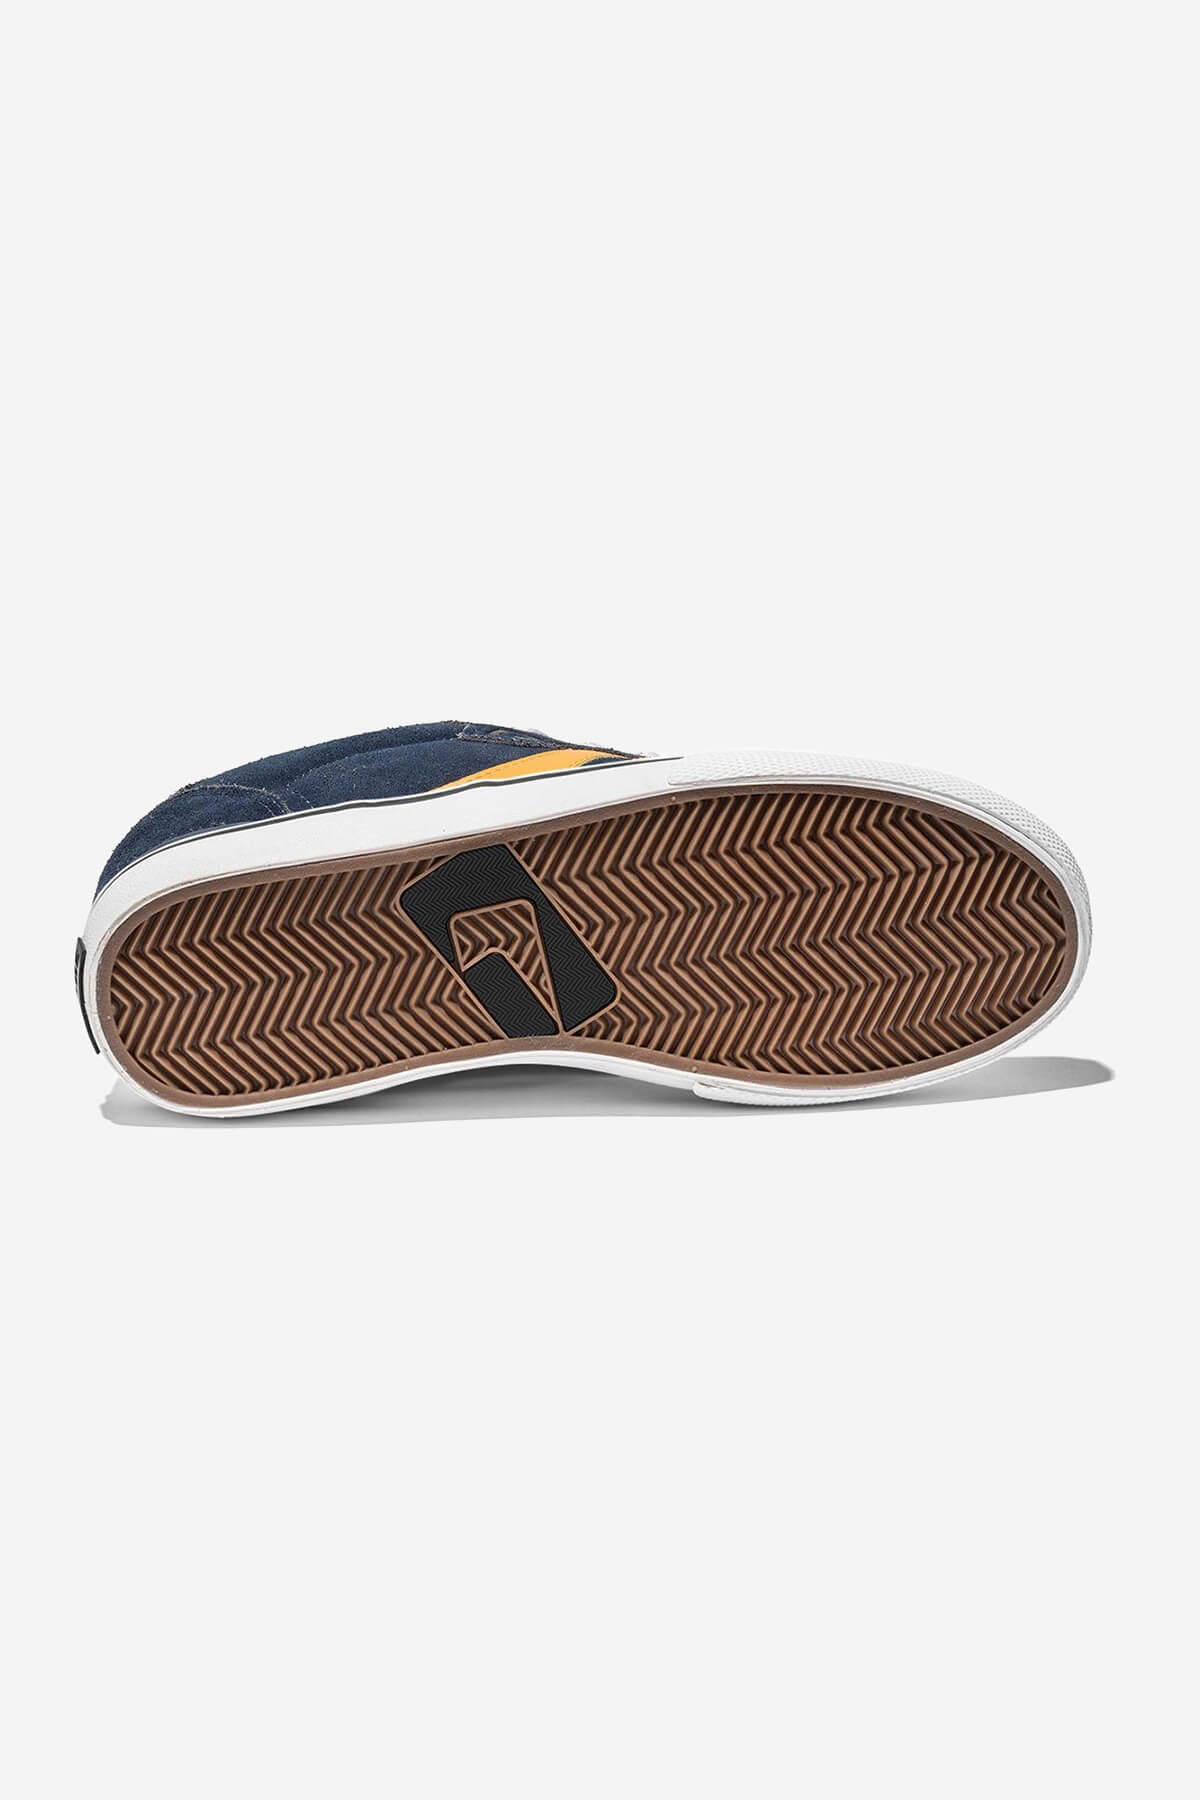 Globe - Encore 2 - Navy/Yellow - skateboard Zapatos